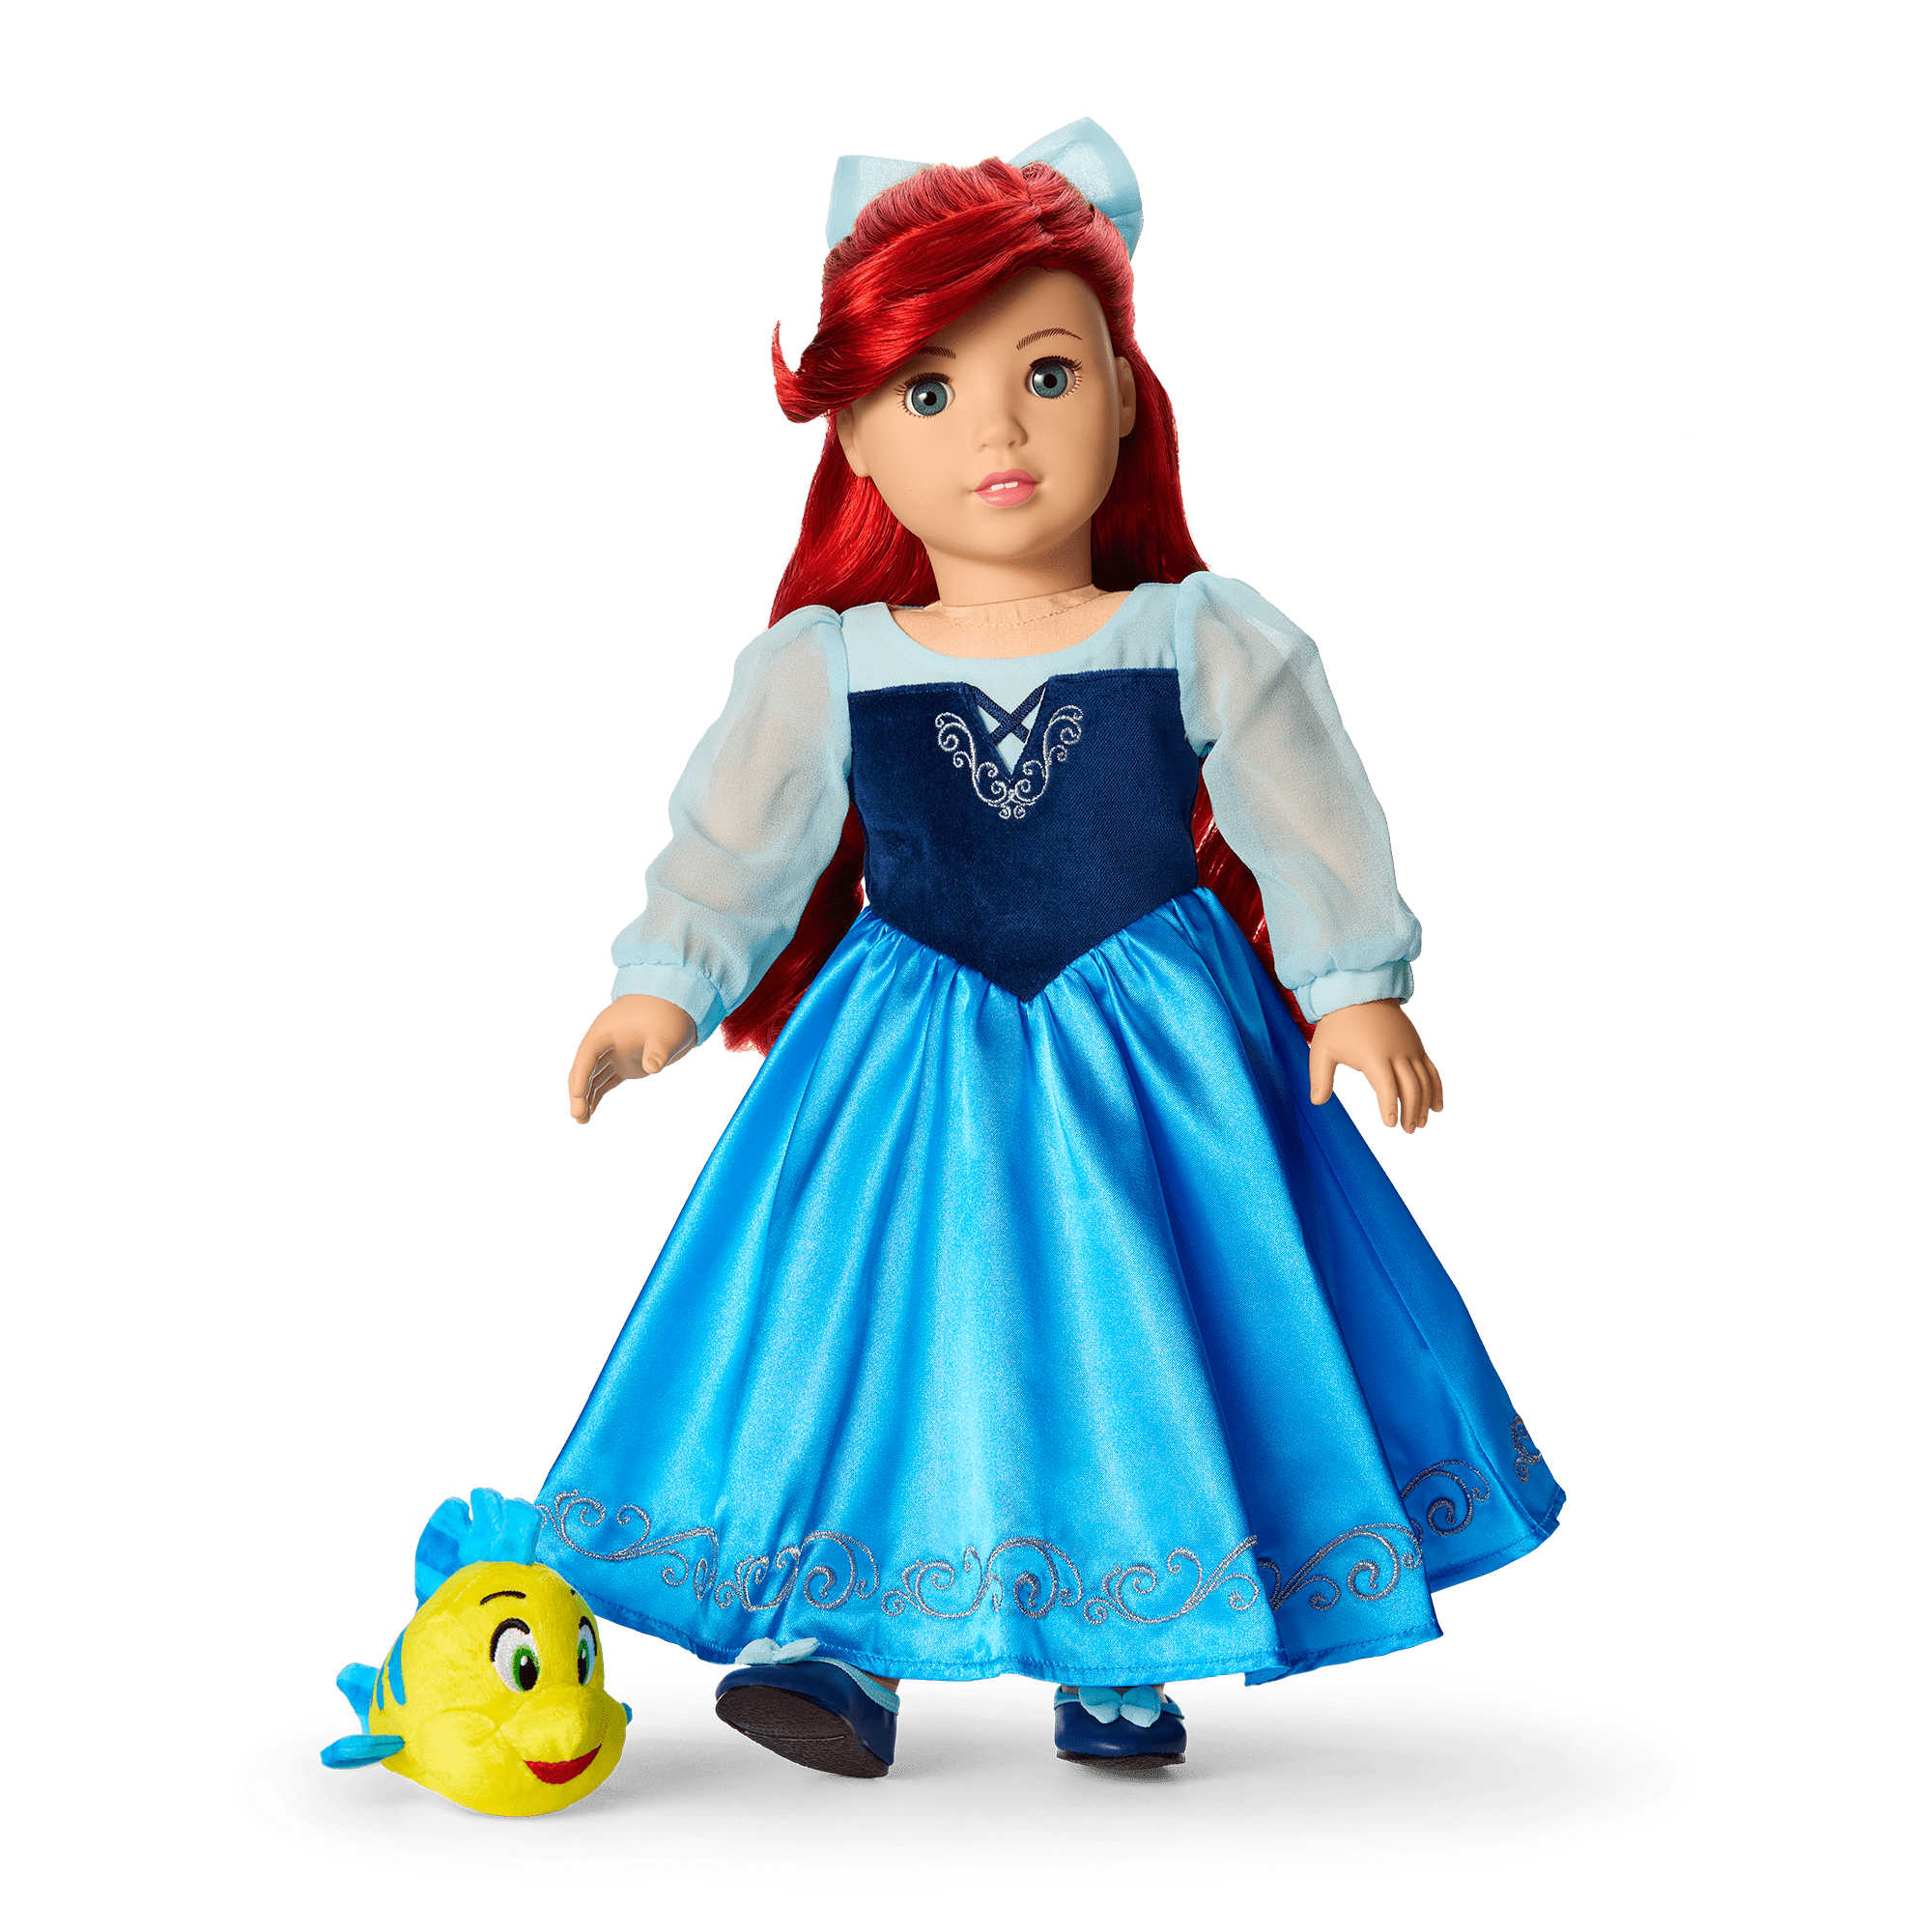 American Girl® Disney Princess Ariel Day Dress, Flounder & Accessories for 18-inch Dolls